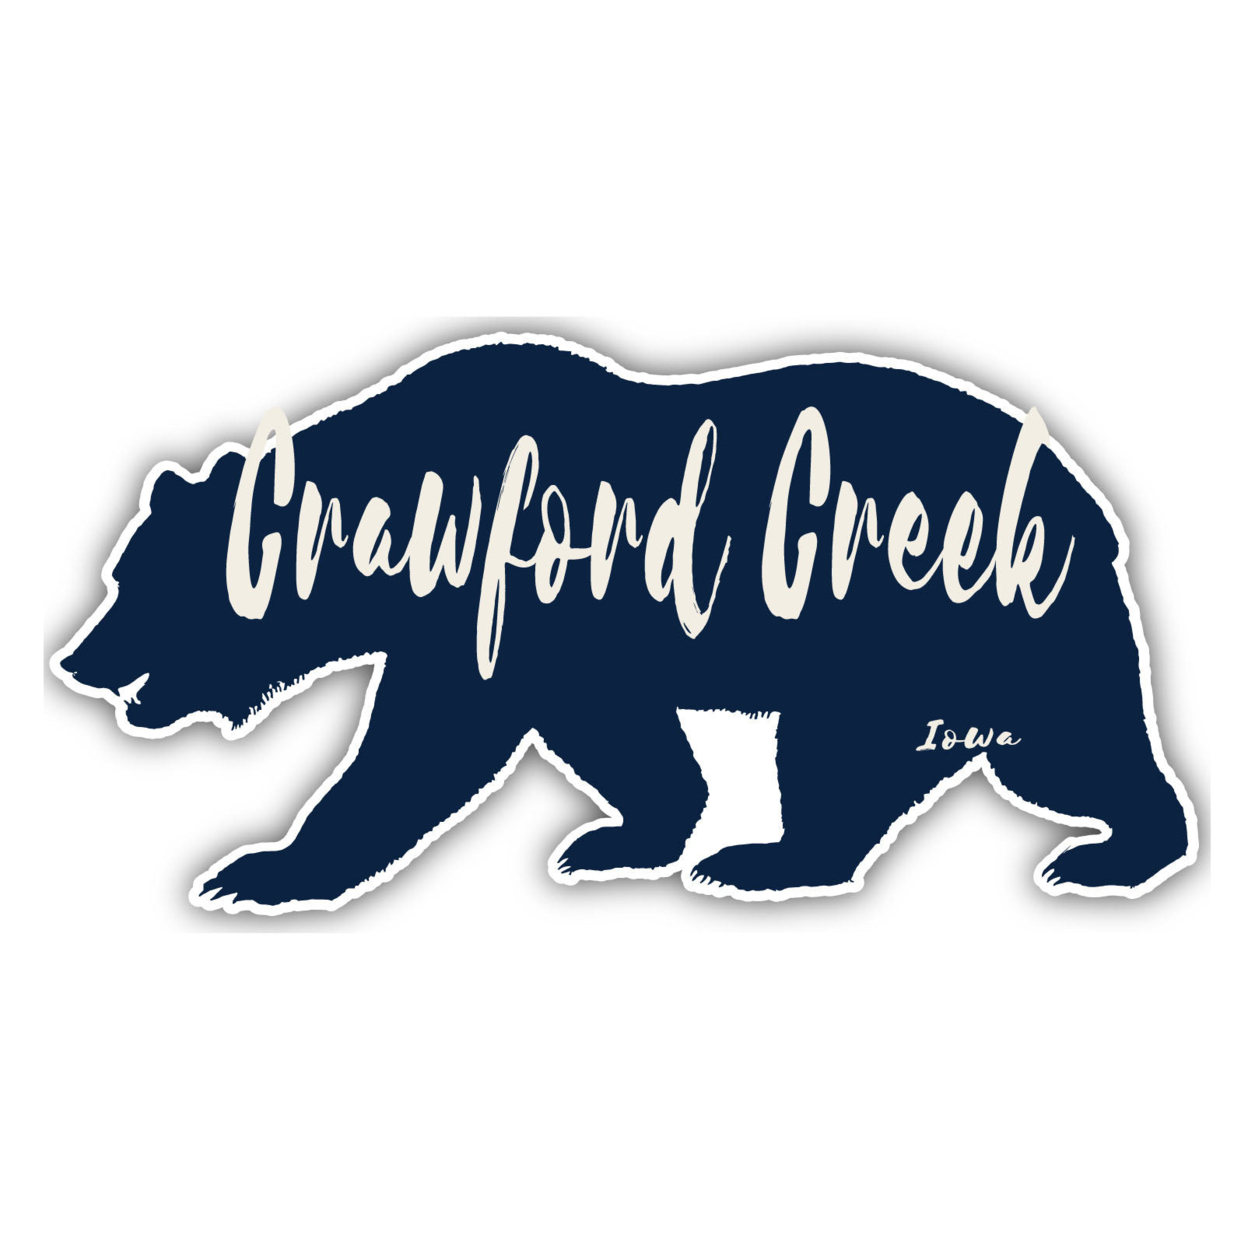 Crawford Creek Iowa Souvenir Decorative Stickers (Choose Theme And Size) - Single Unit, 8-Inch, Bear